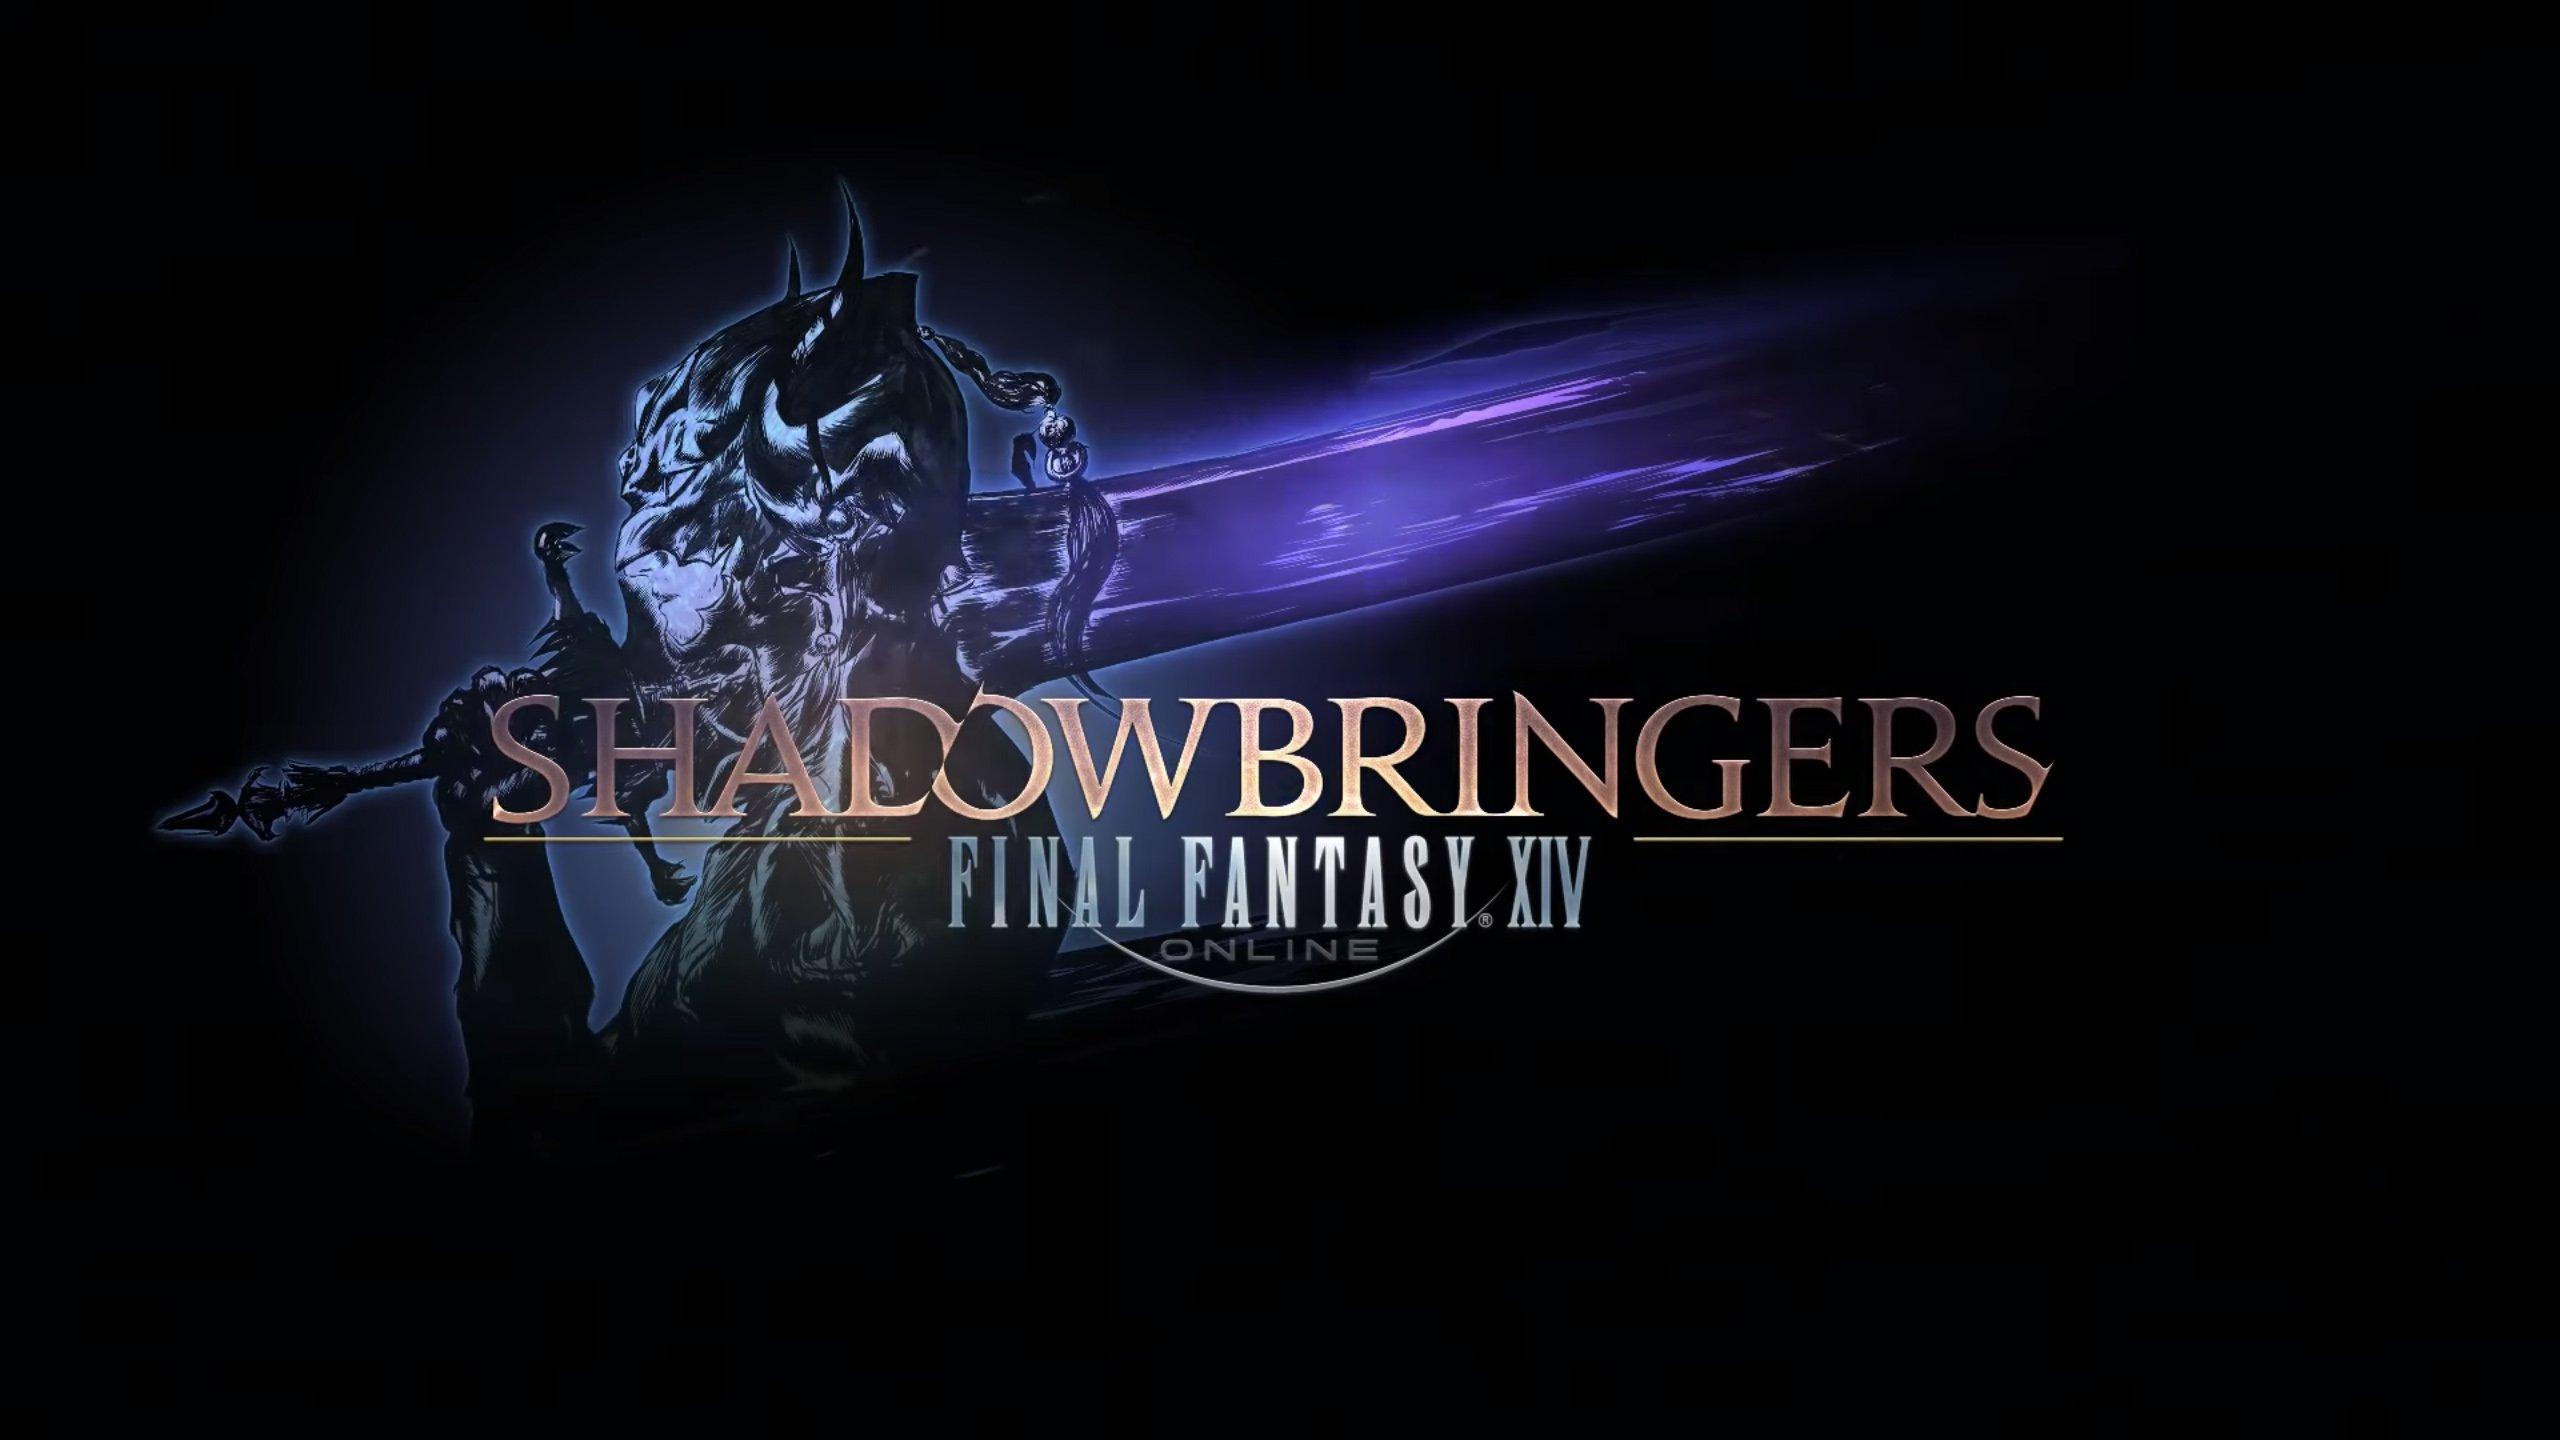 Final Fantasy Xiv Shadowbringers Phone Wallpaper Ranktechnology